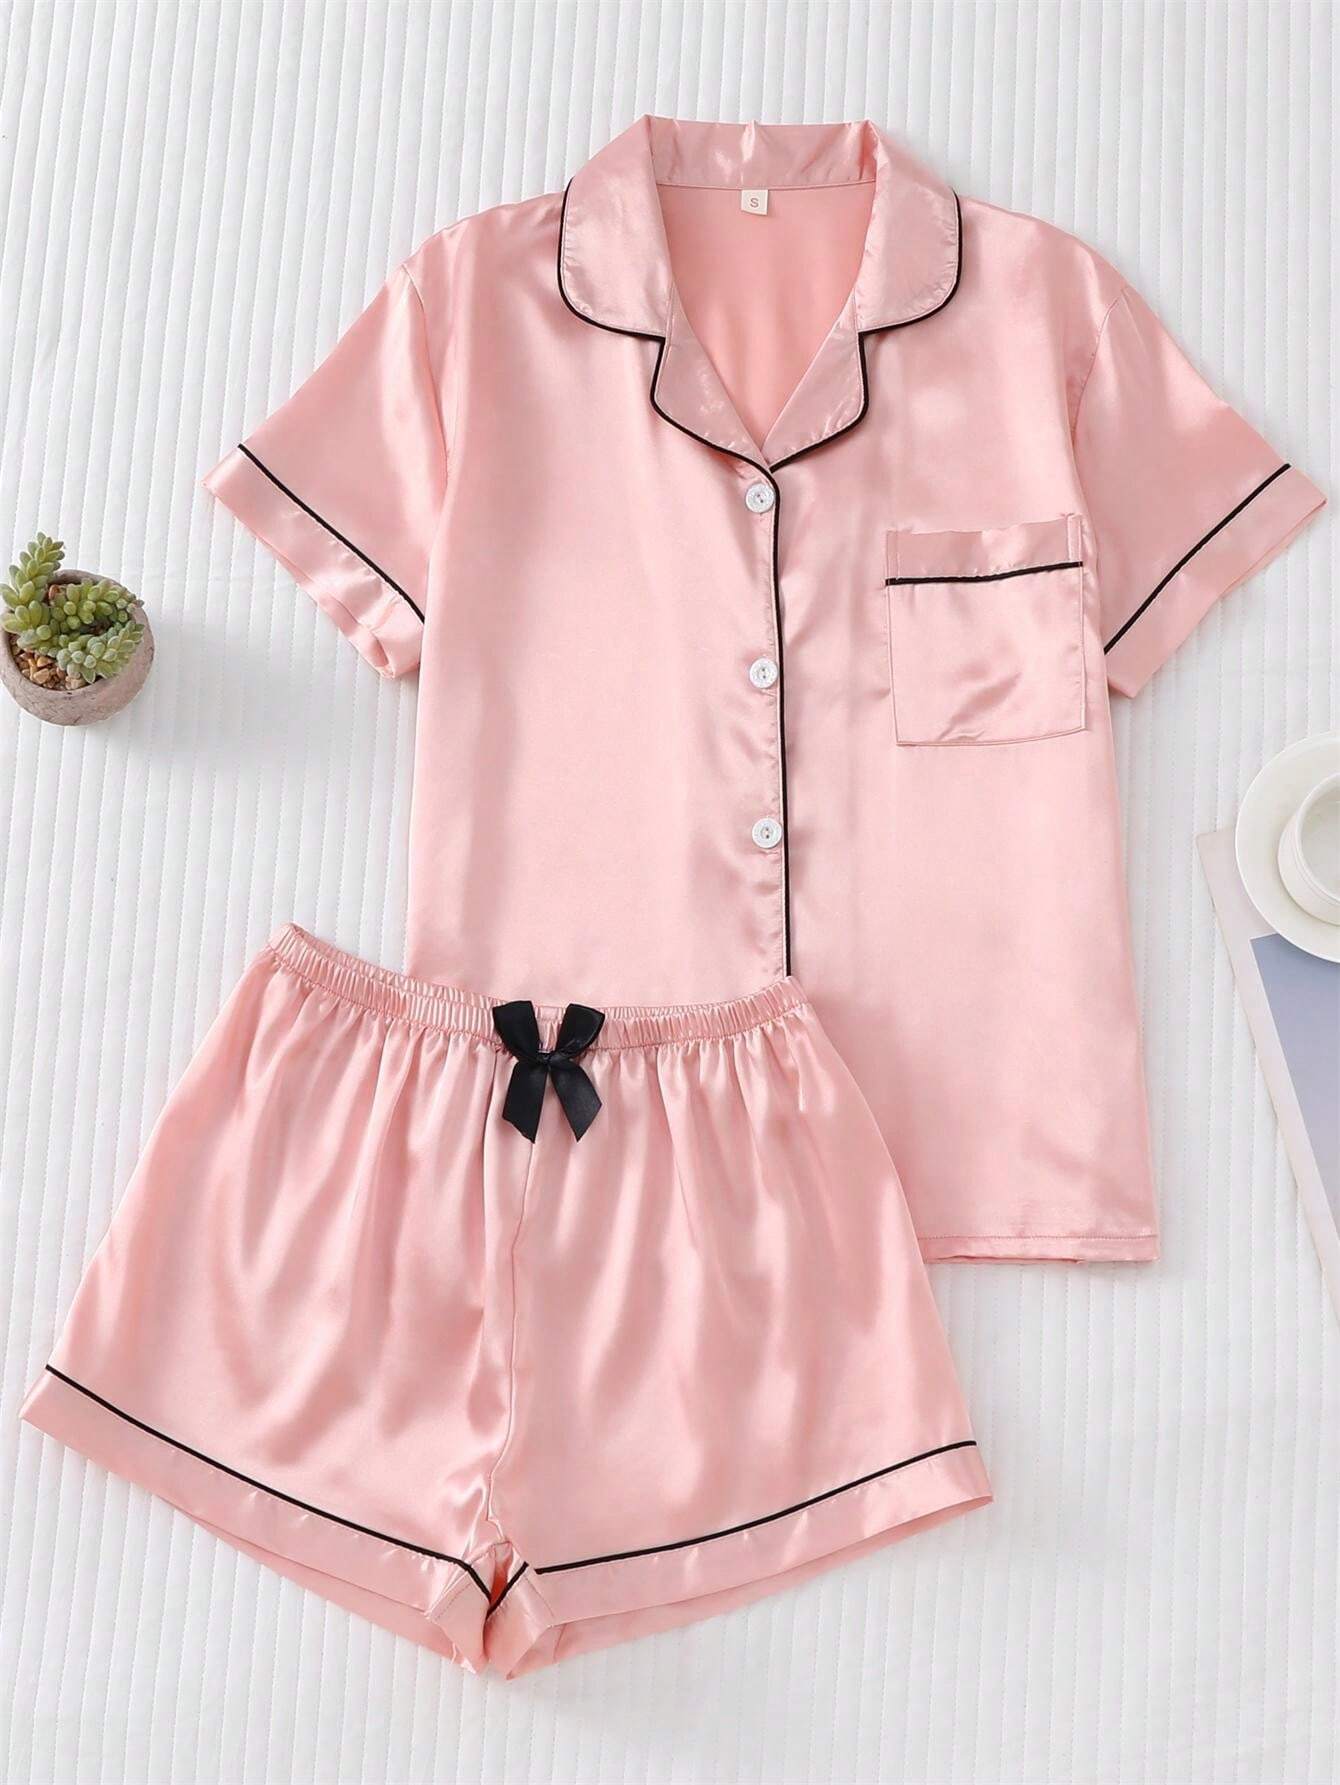 2pcs/set Satin Pajama Set For Women, Short Sleeved Turn-down Collar Top And Bowknot Shorts, Home Clothing